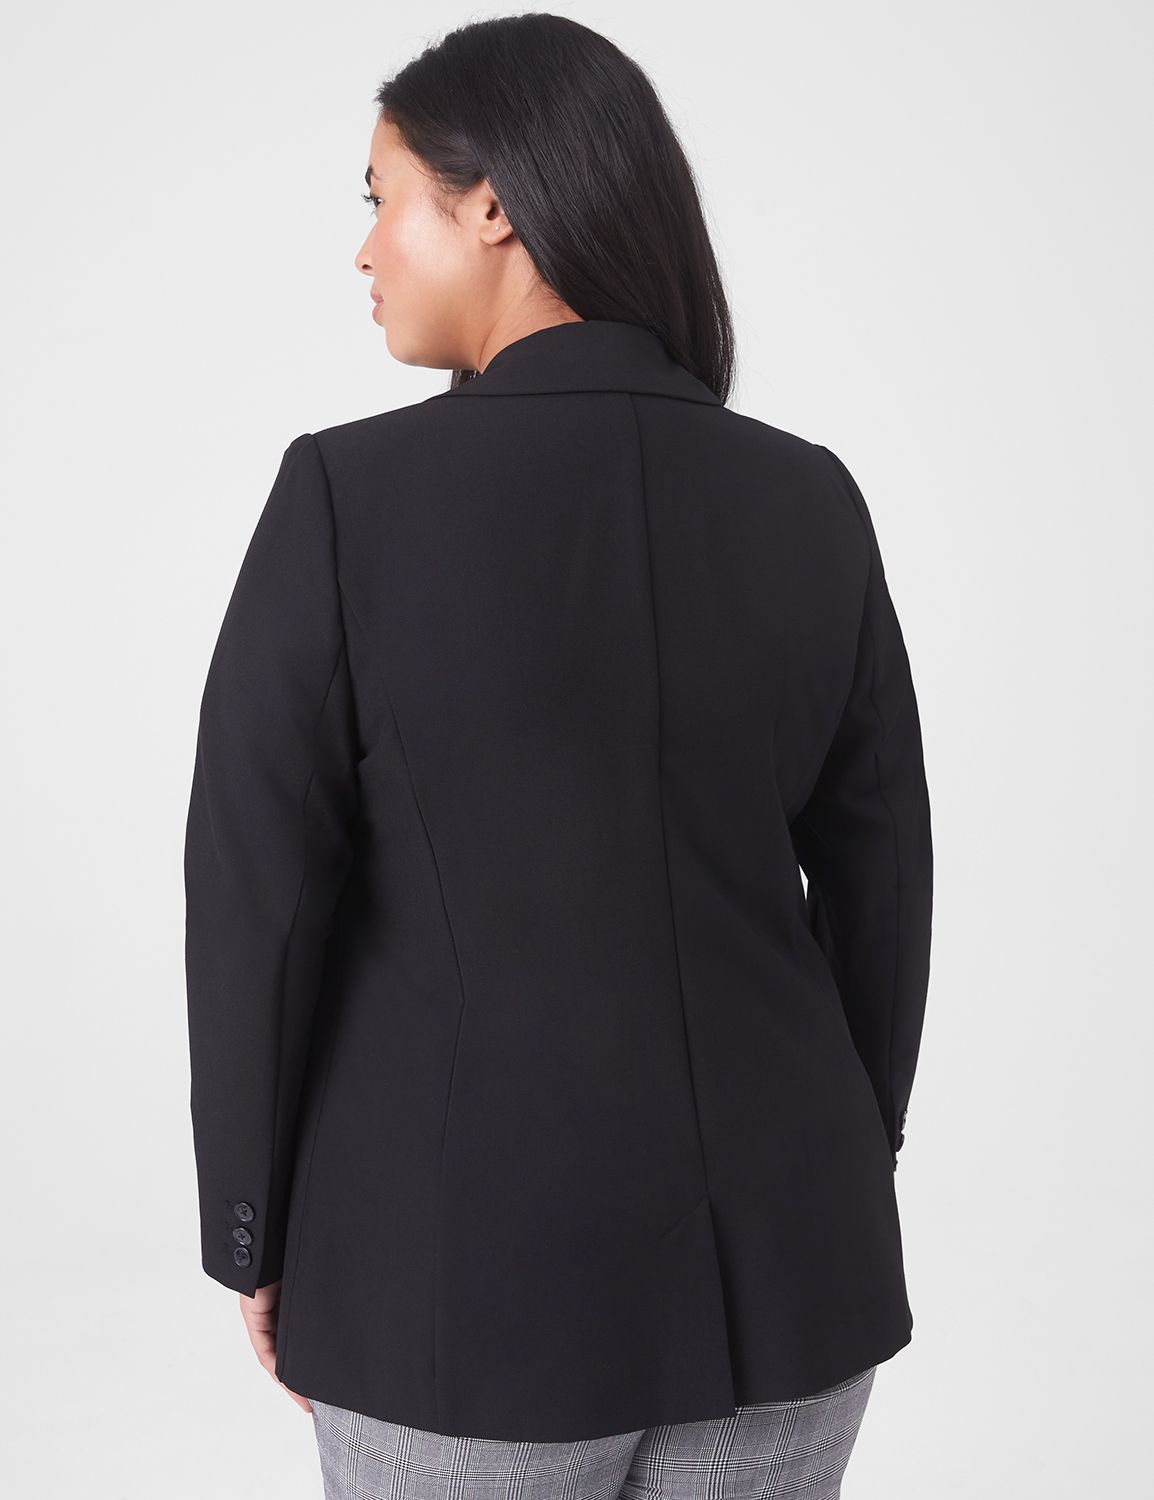 drape coat over shoulders - Google Search